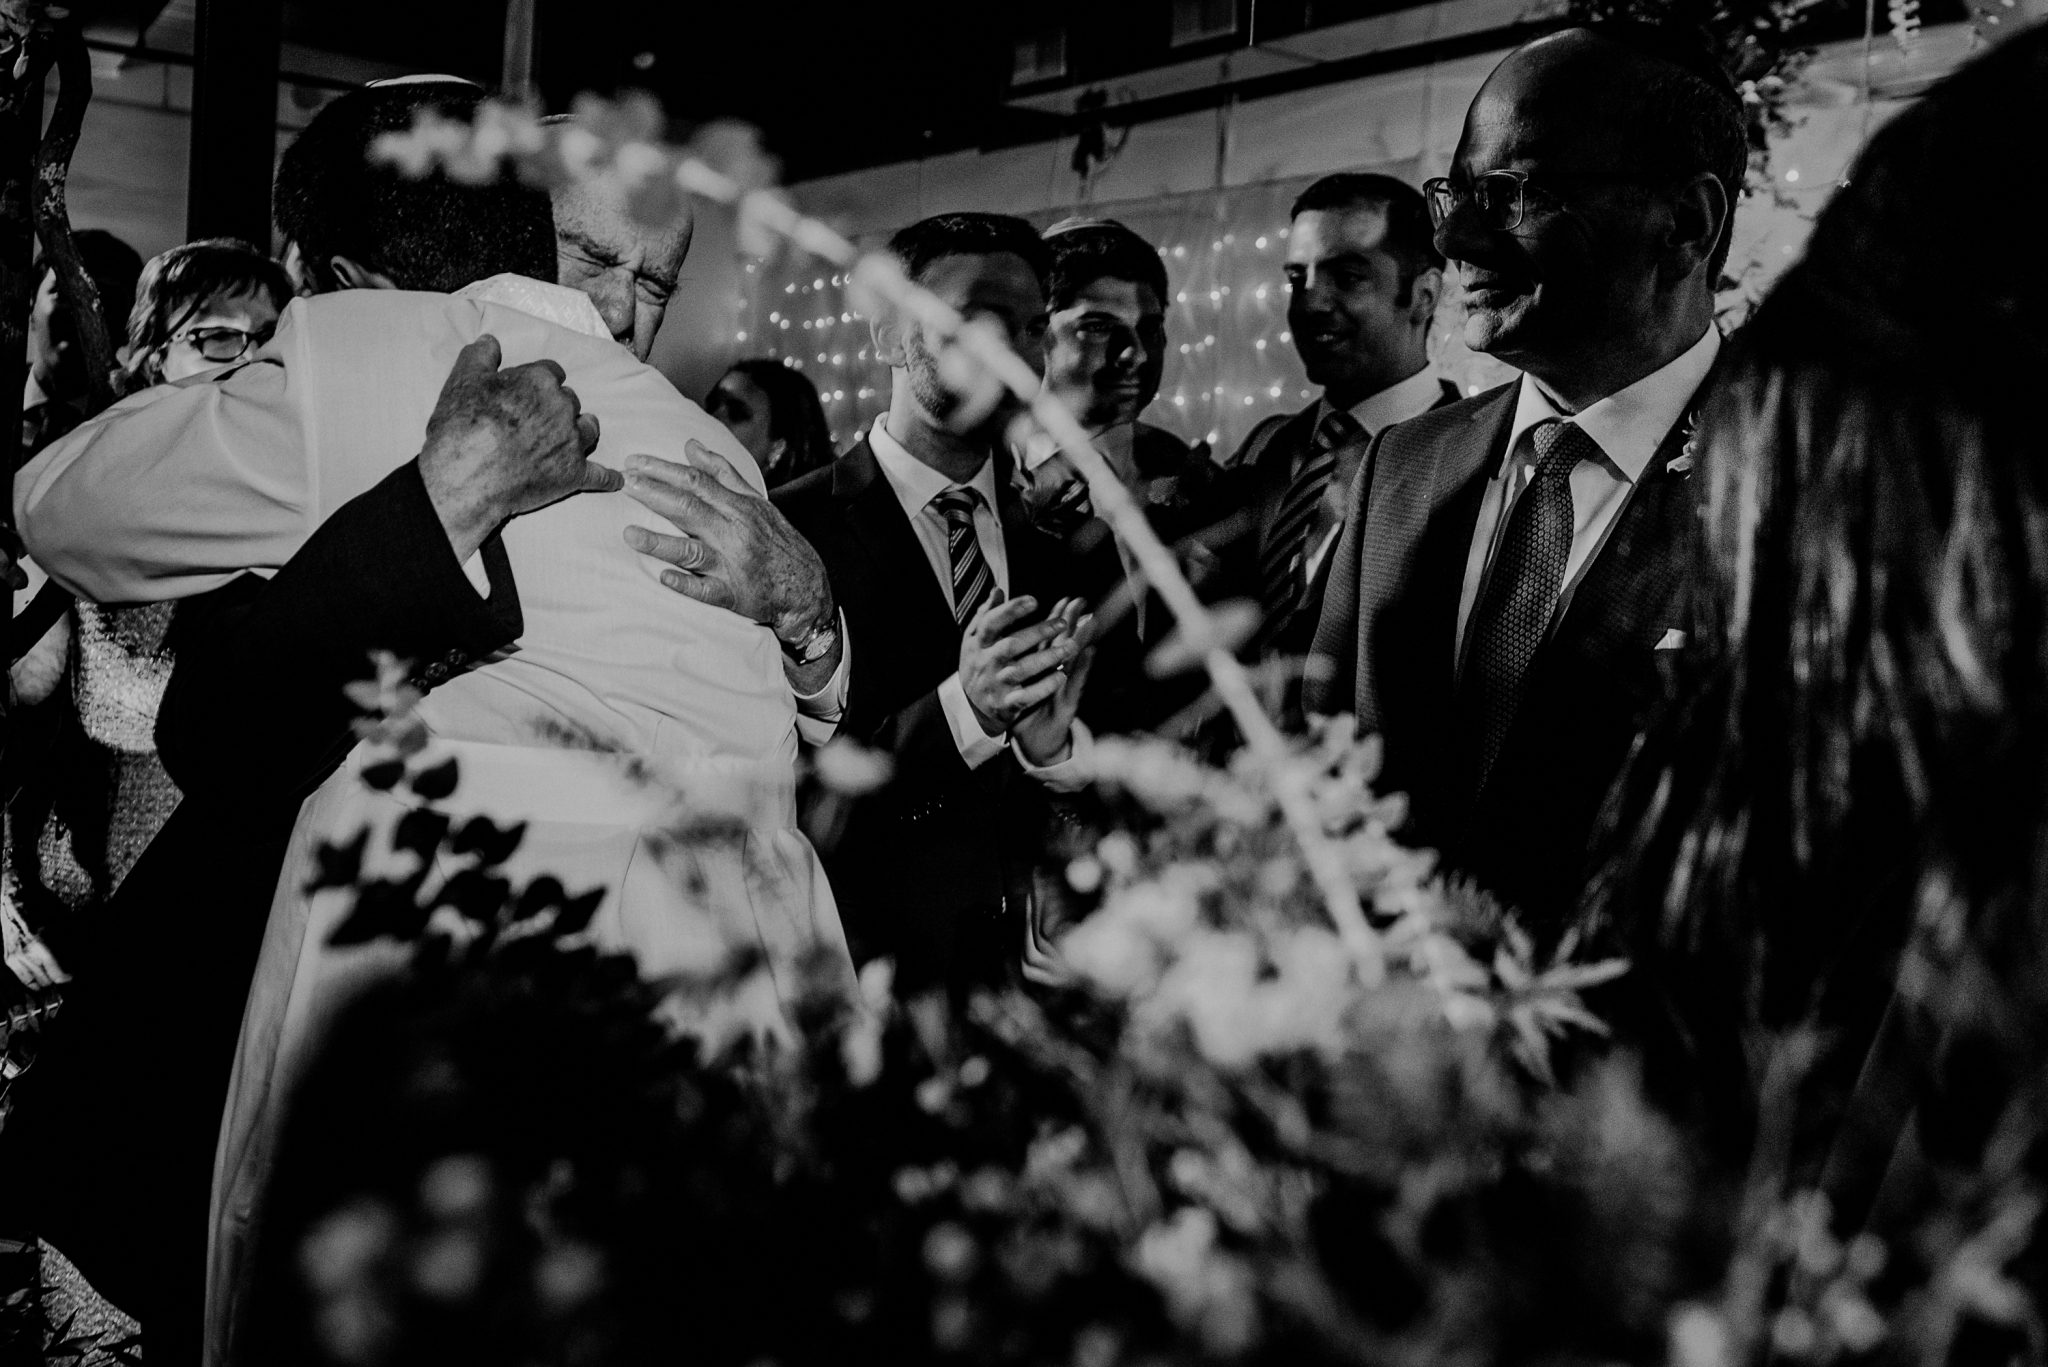 black and white fine art wedding photography